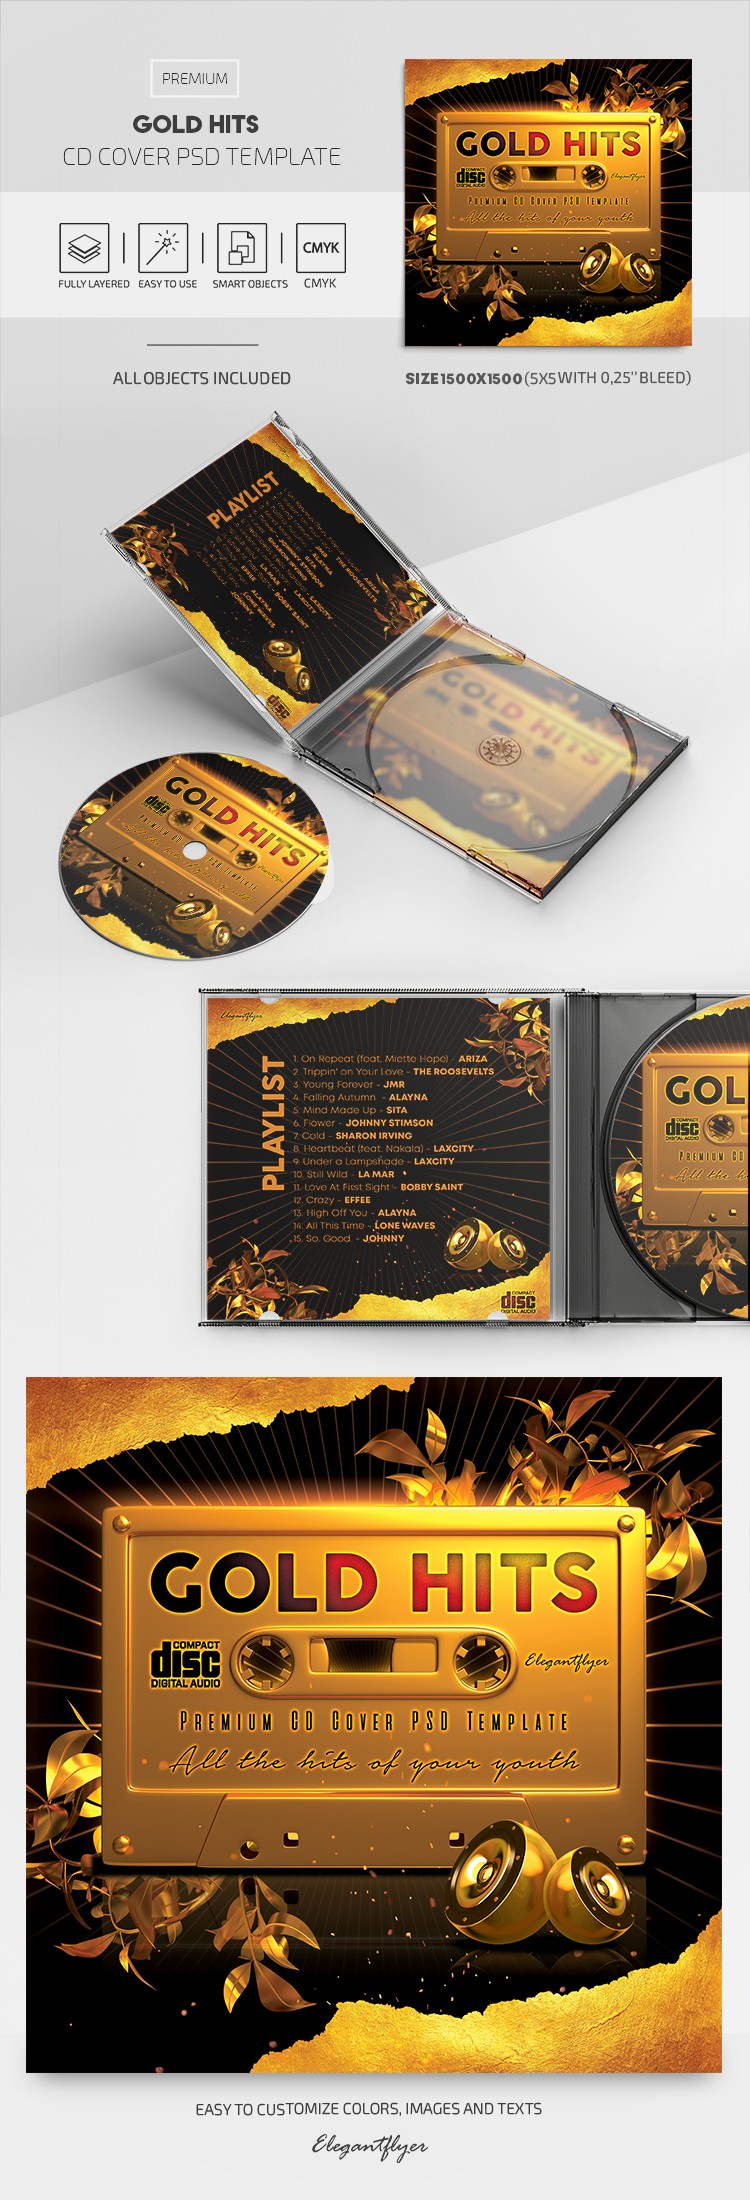 Couverture CD Gold Hits by ElegantFlyer